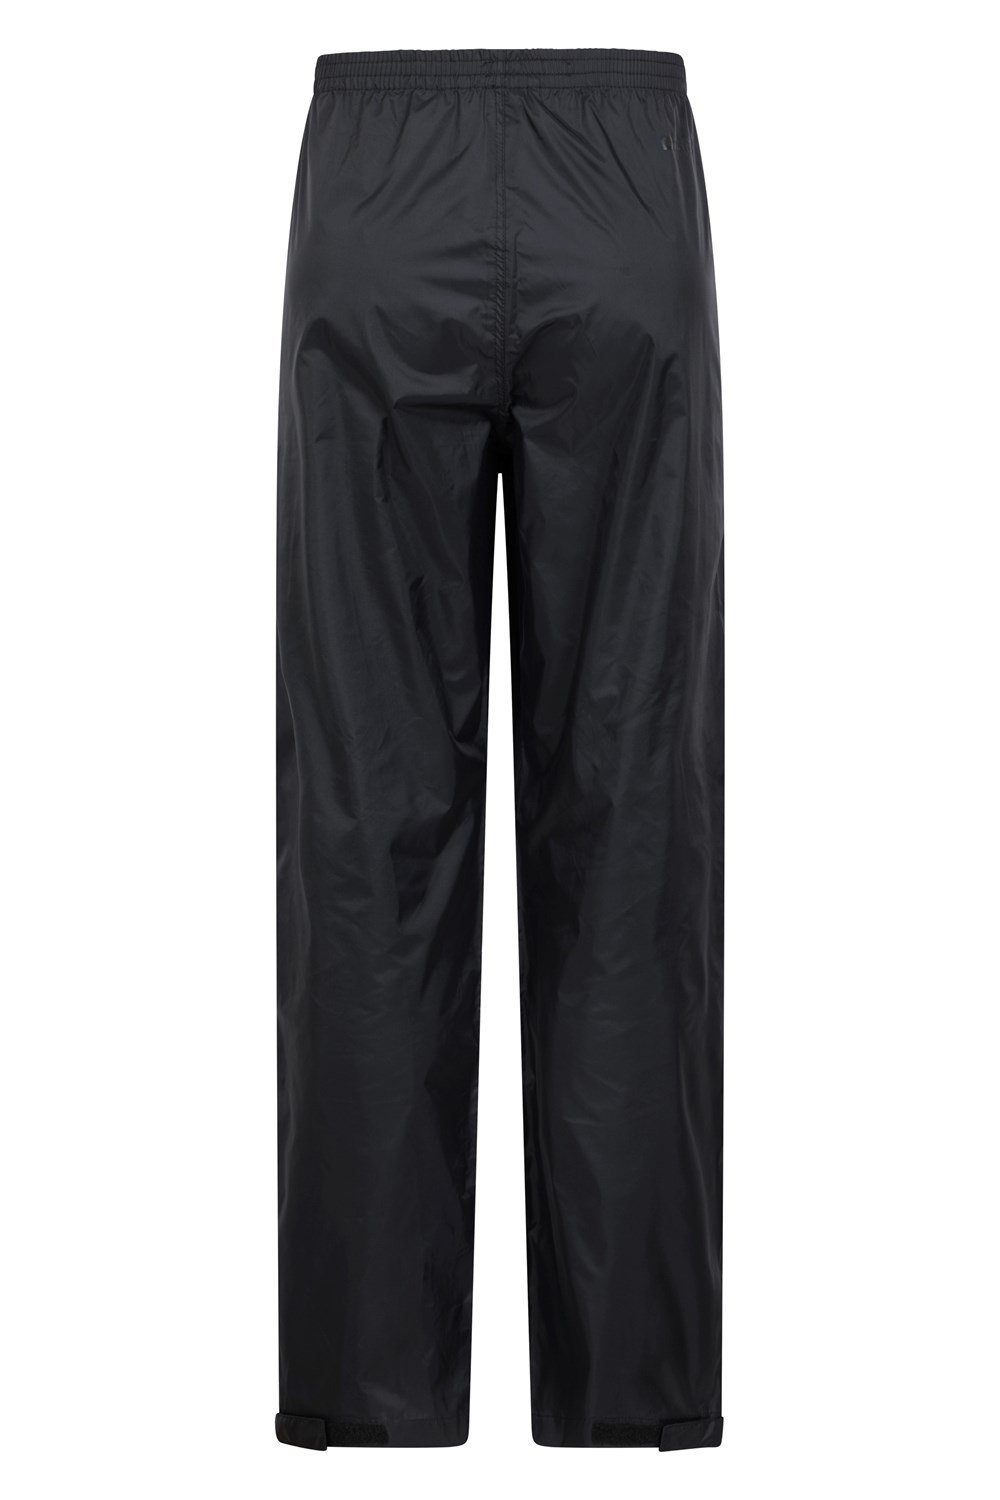 Mountain Warehouse Womens Waterproof Over Trousers Walking Rain Pants ...